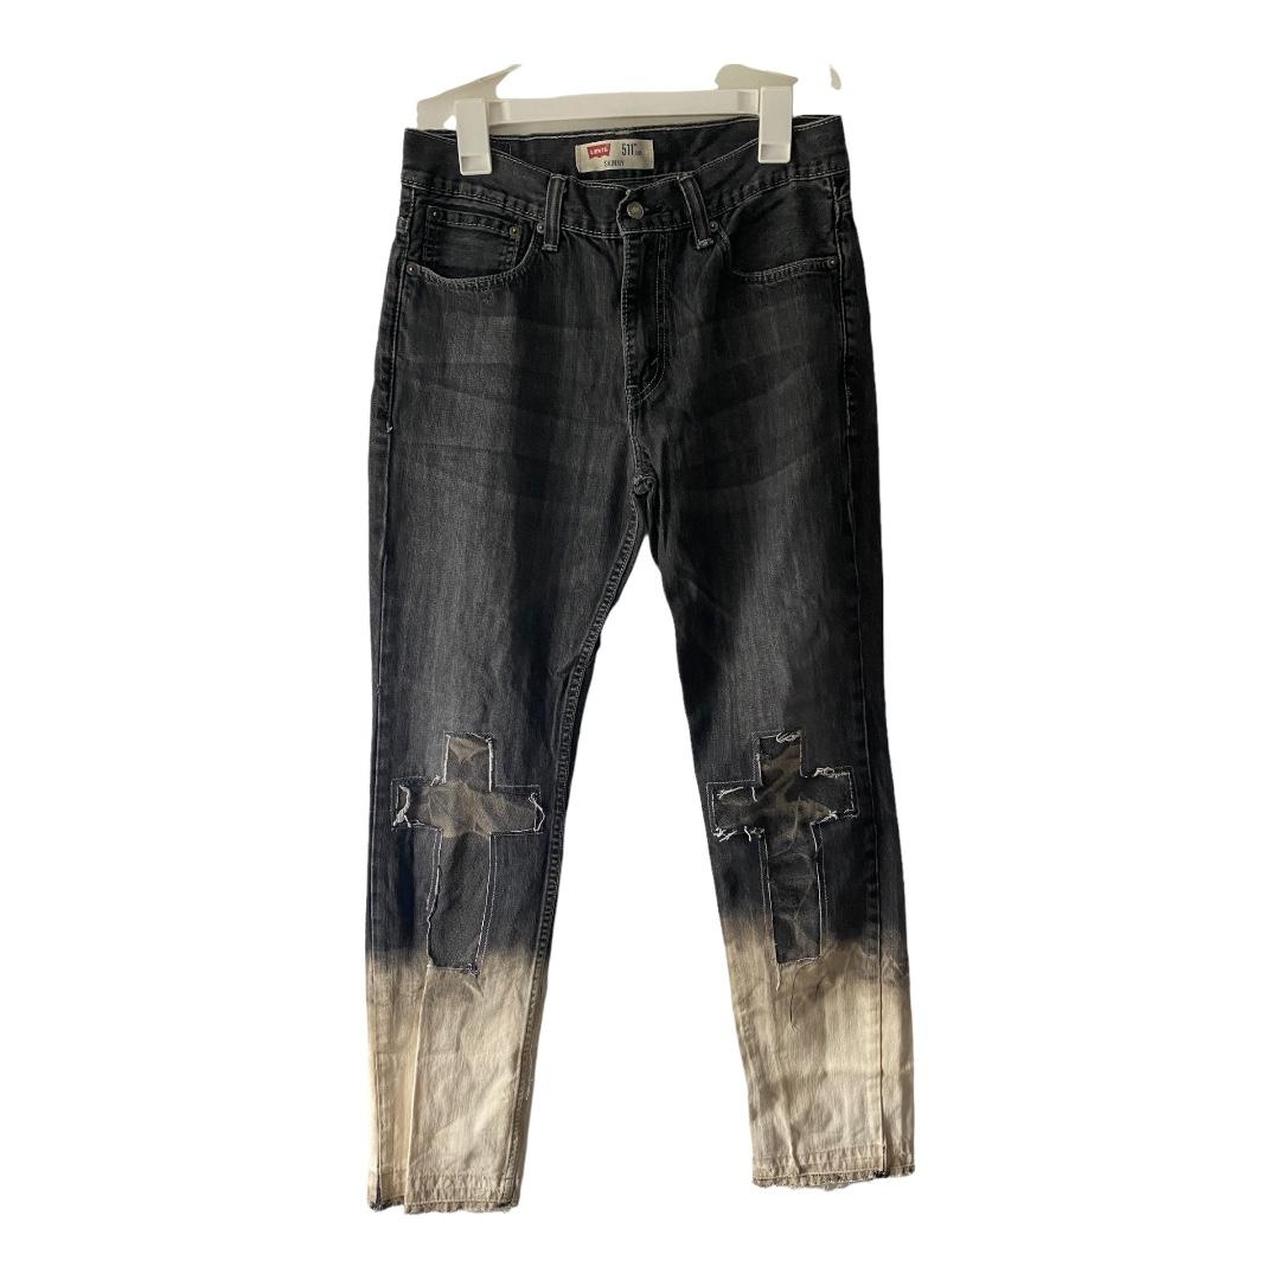 CUSTOM CHROME HEARTS jeans on 511 levi's 🤯 hand - Depop